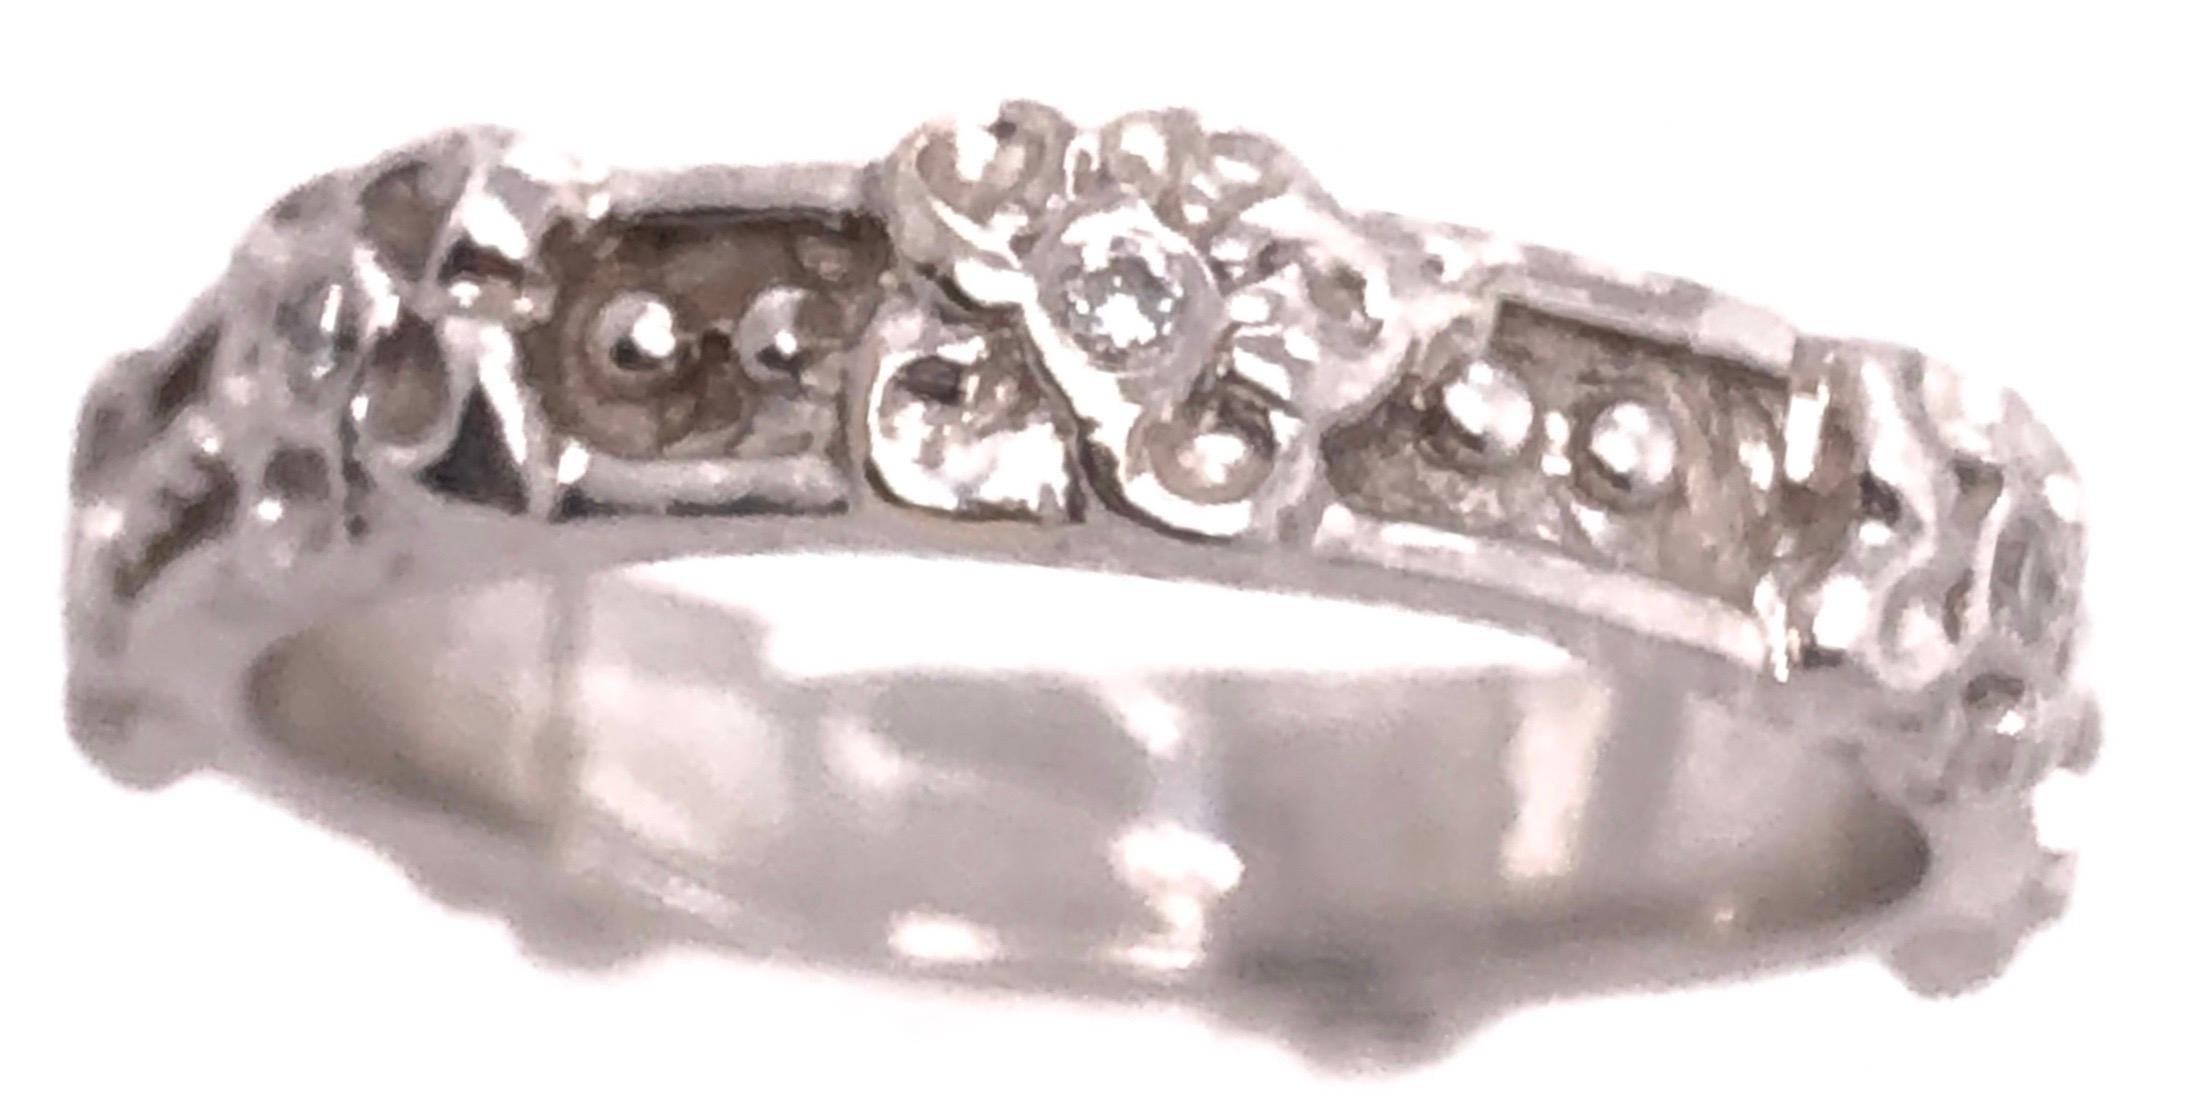 14 Karat White Gold Fashion Ring with Diamonds 0.25 TDW.
Size 7
3 grams total weight